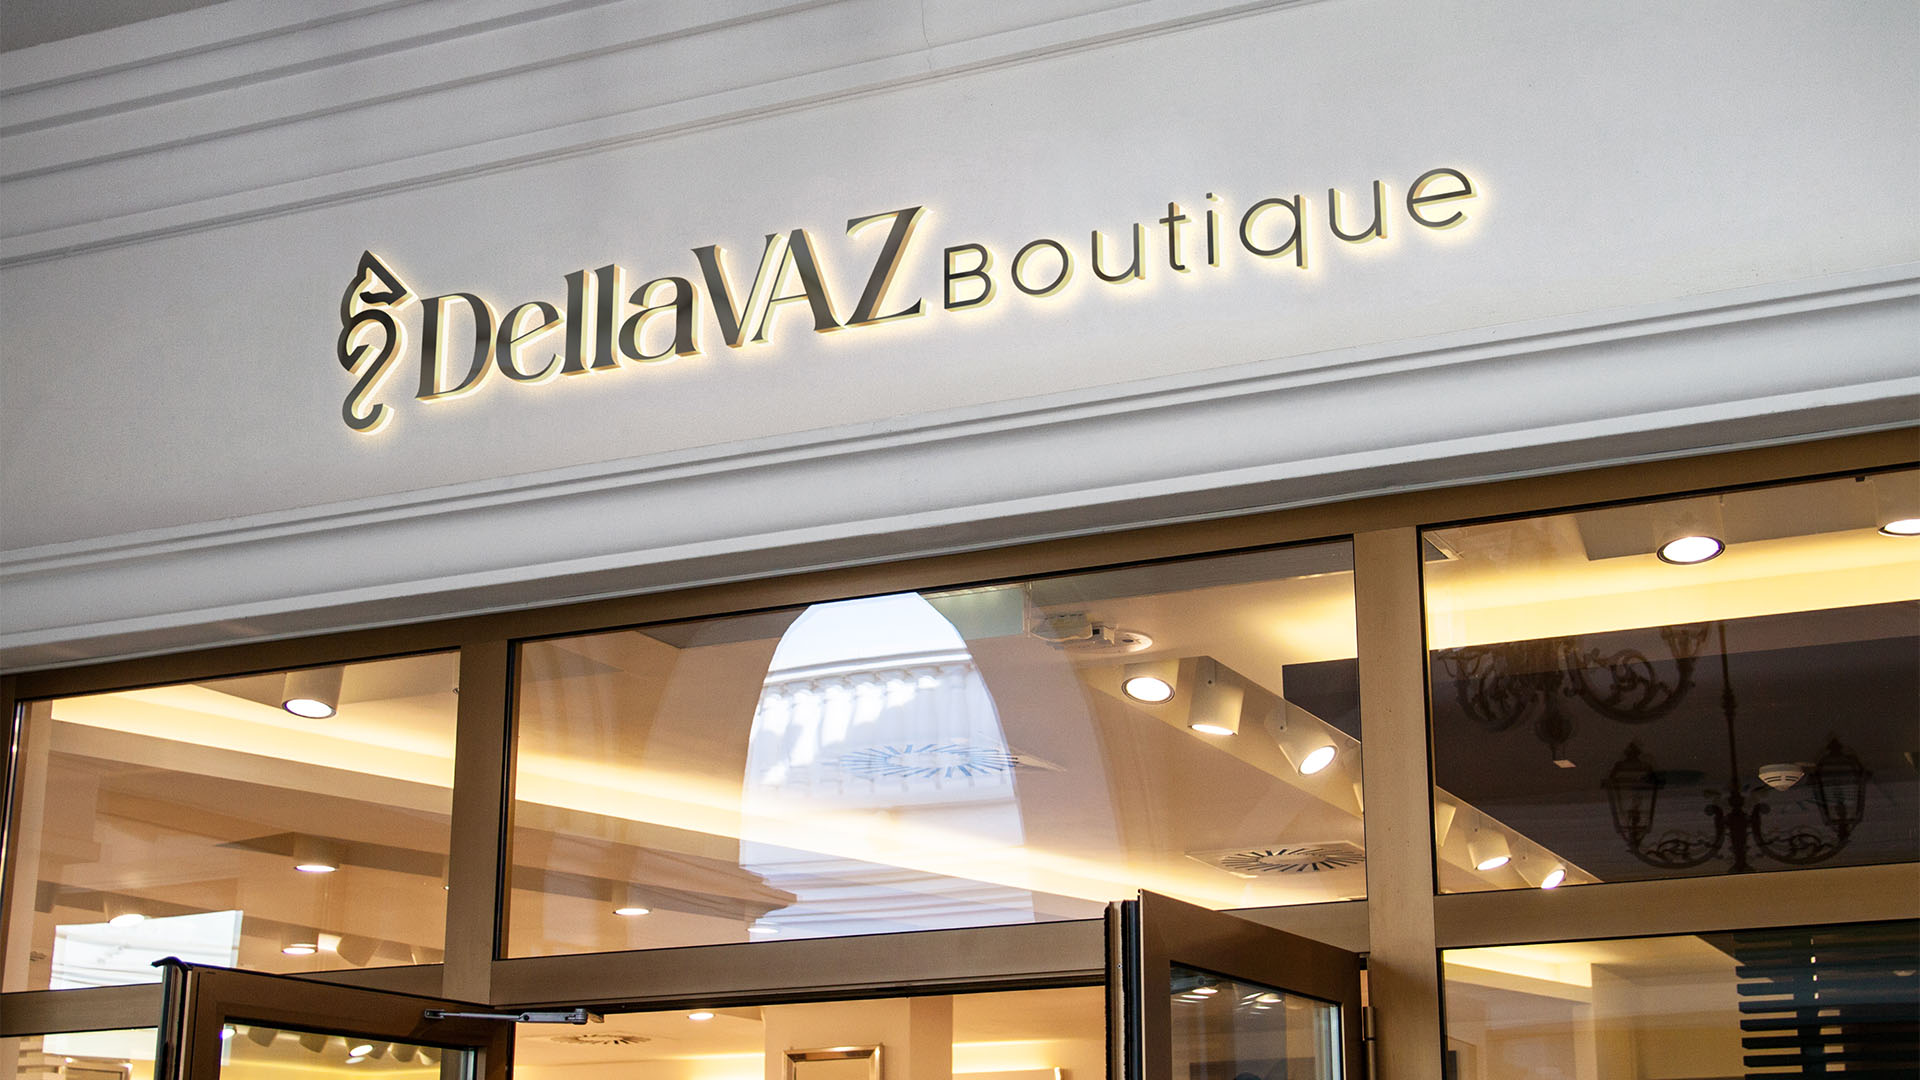 Dellavaz Boutique